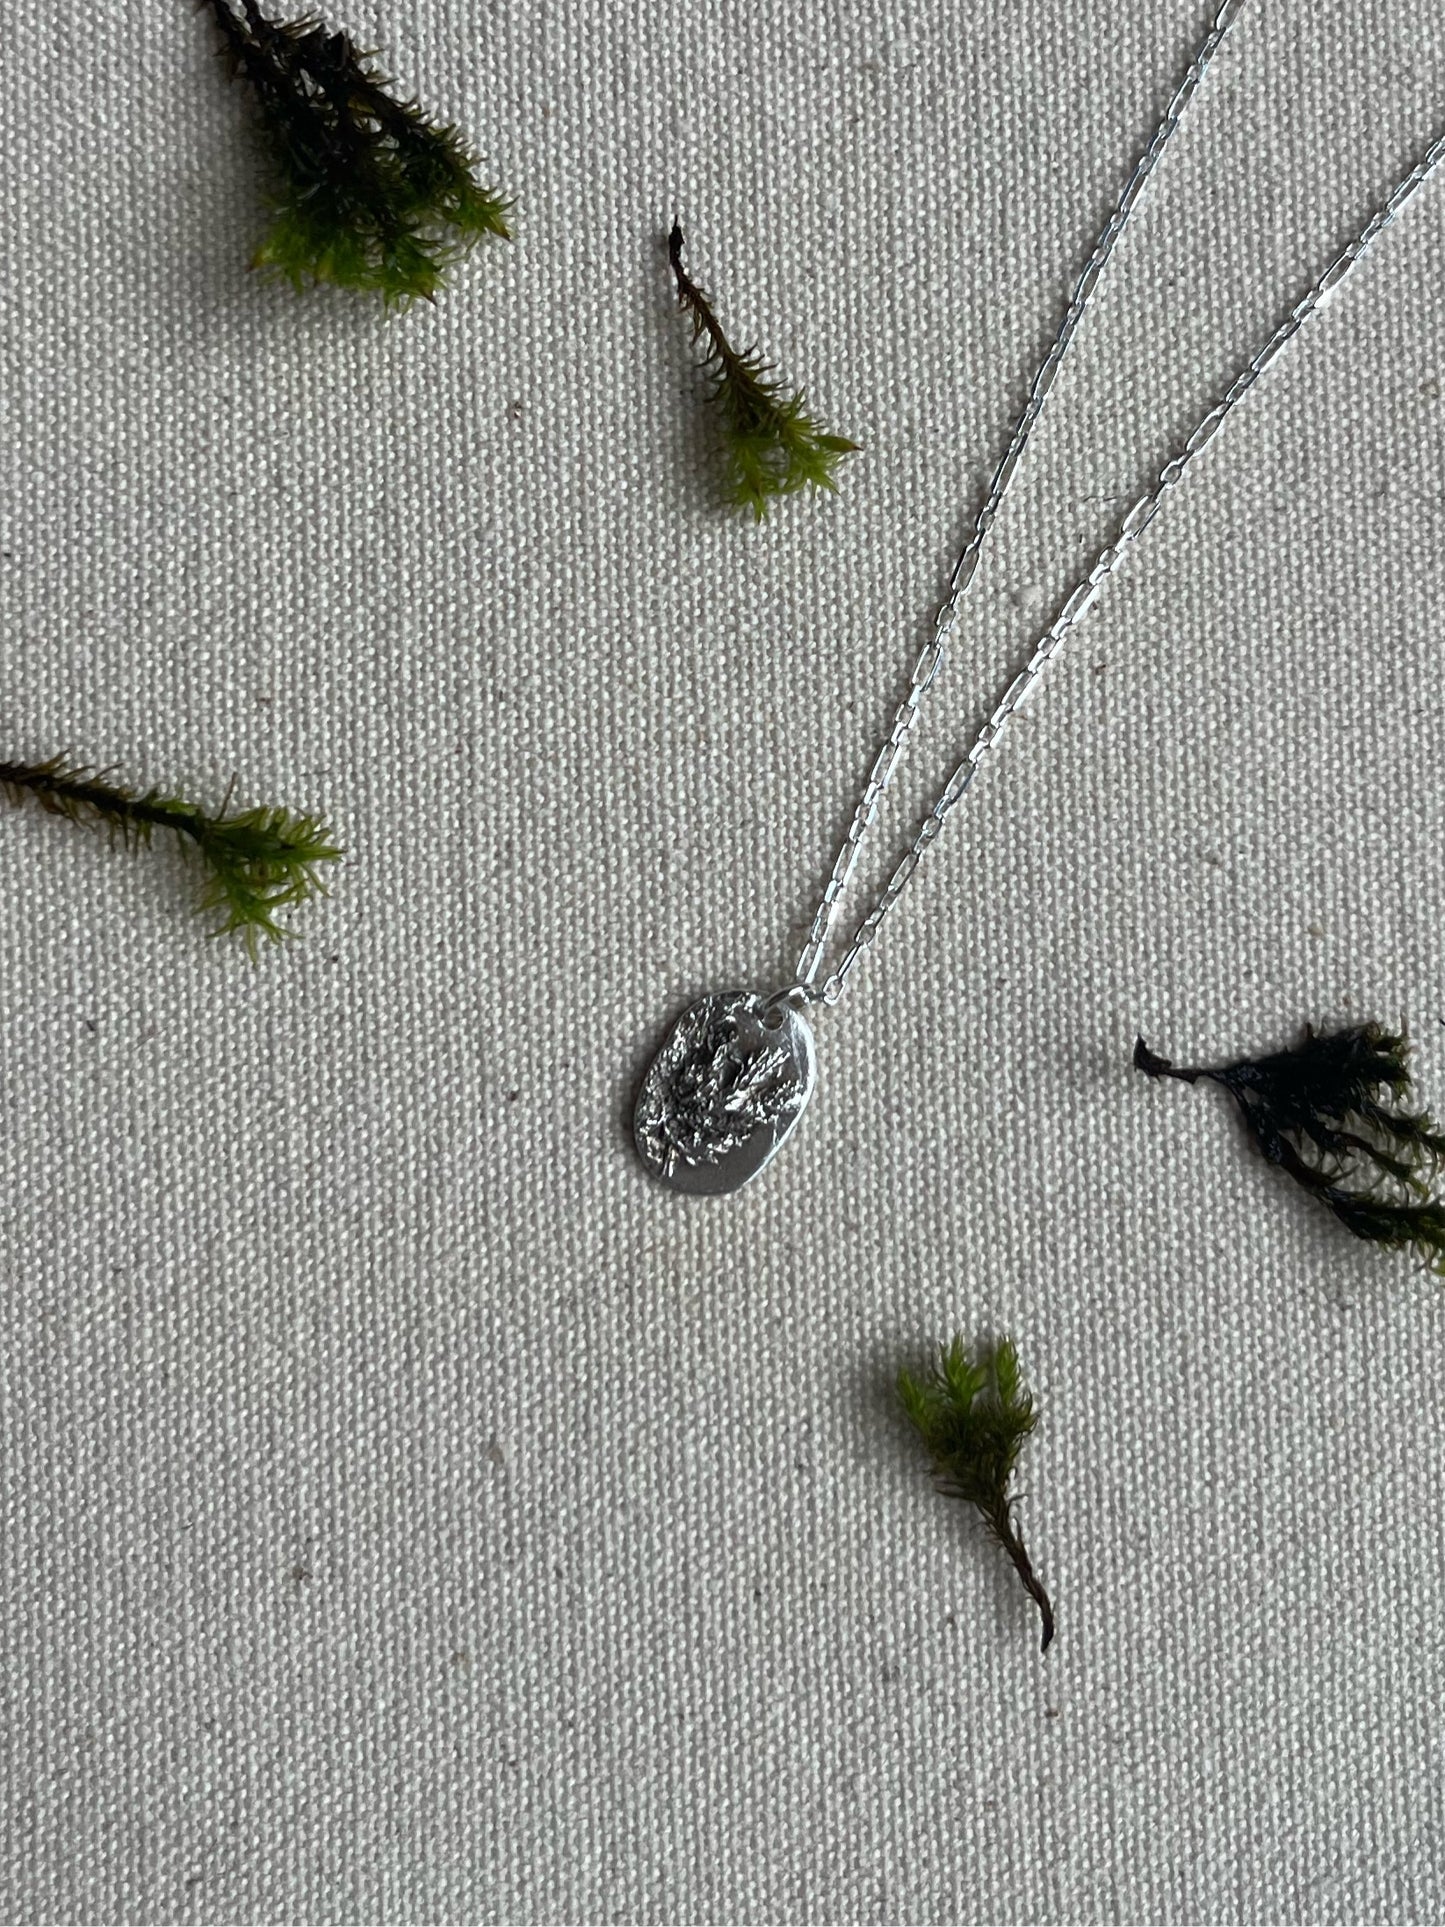 Plant Medallion Necklace - Medium